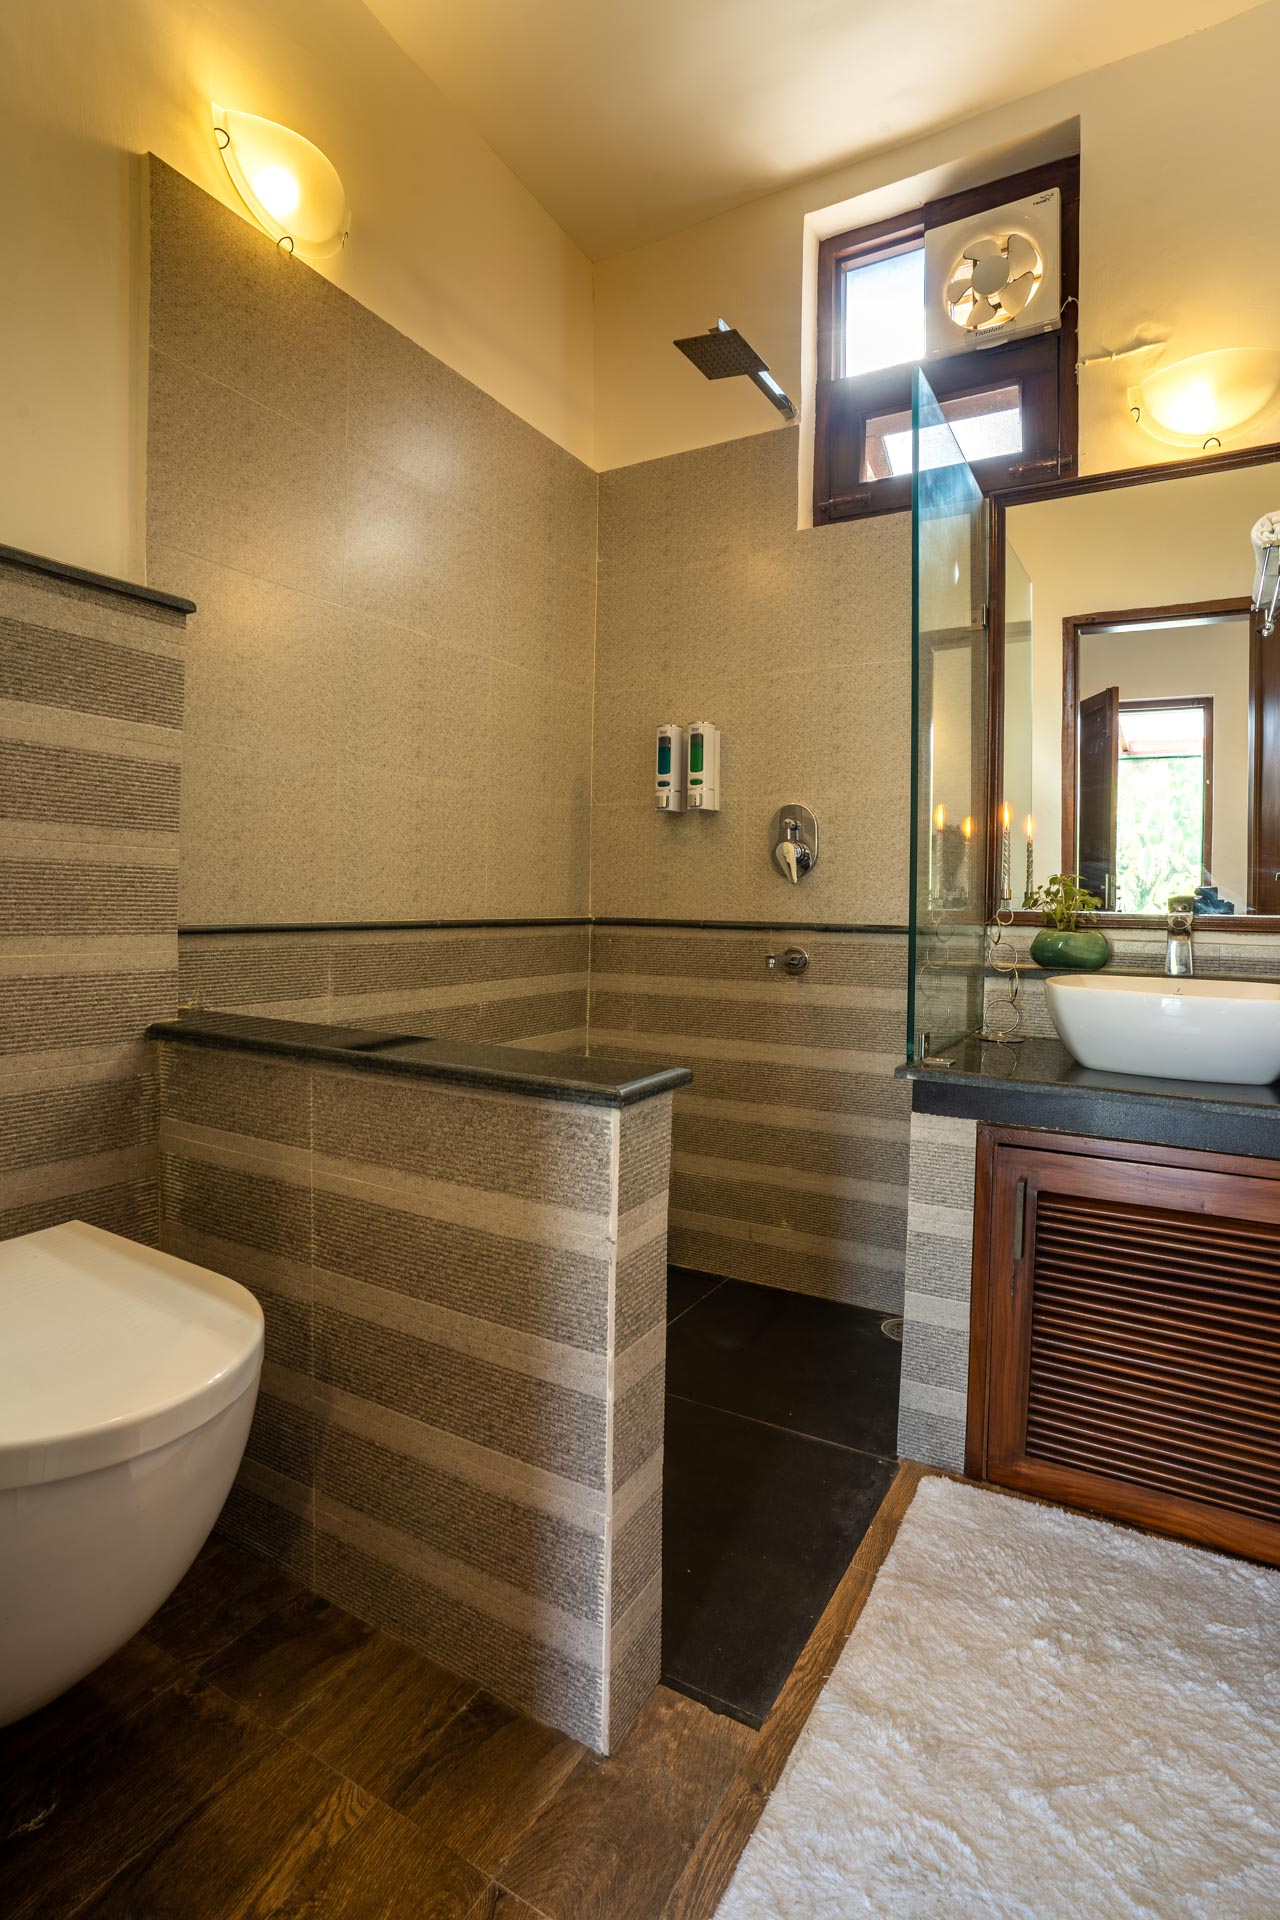 The Homestead - Executive room bathroom